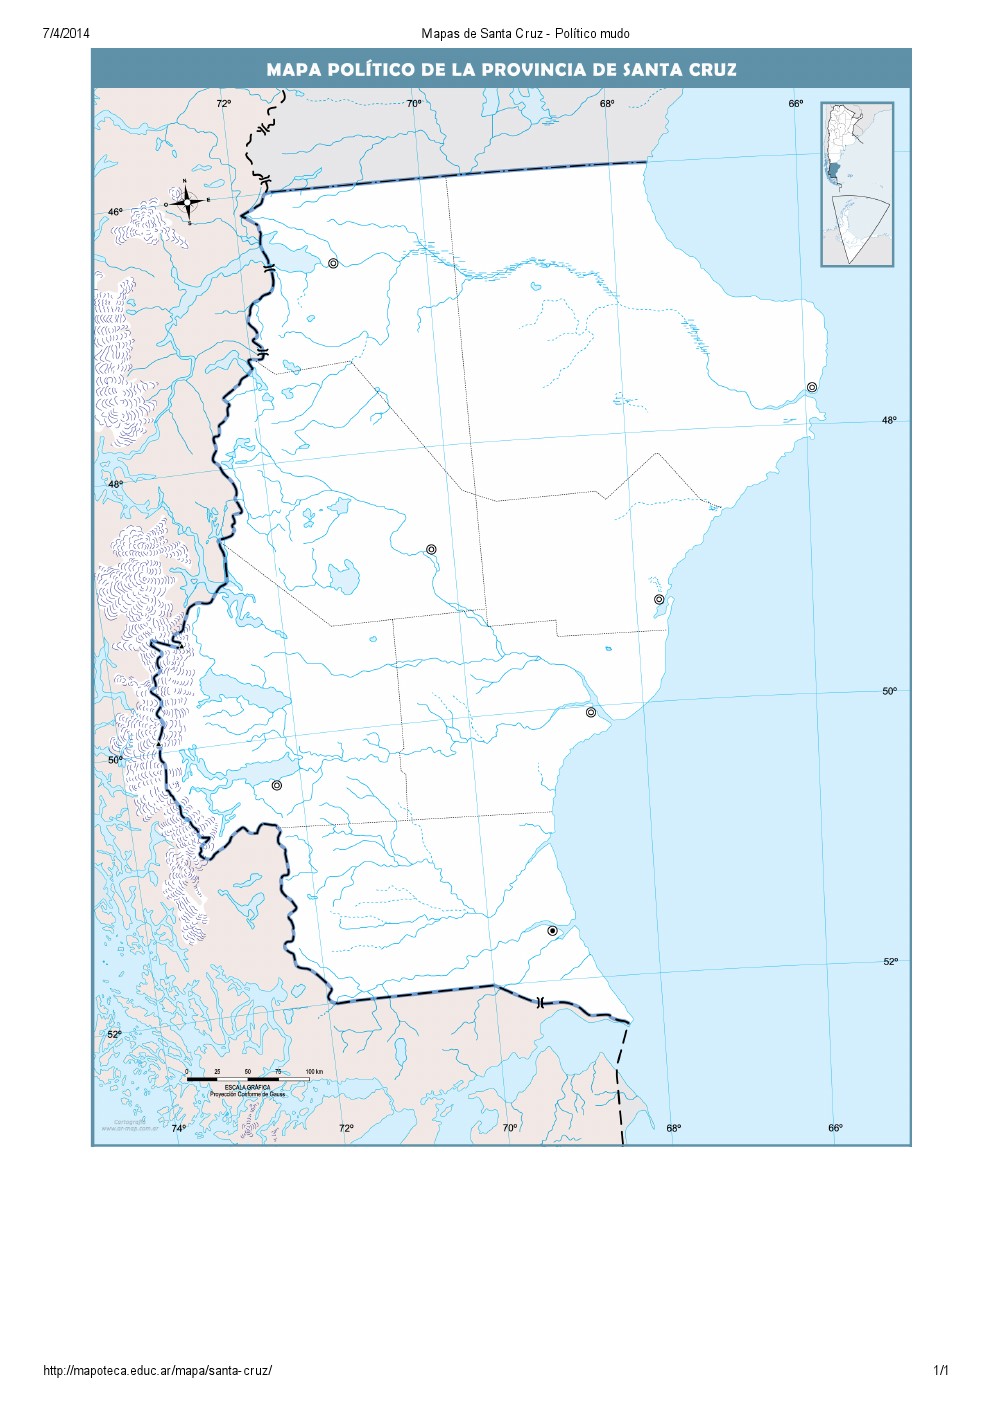 Mapa mudo de capitales de Santa Cruz. Mapoteca de Educ.ar